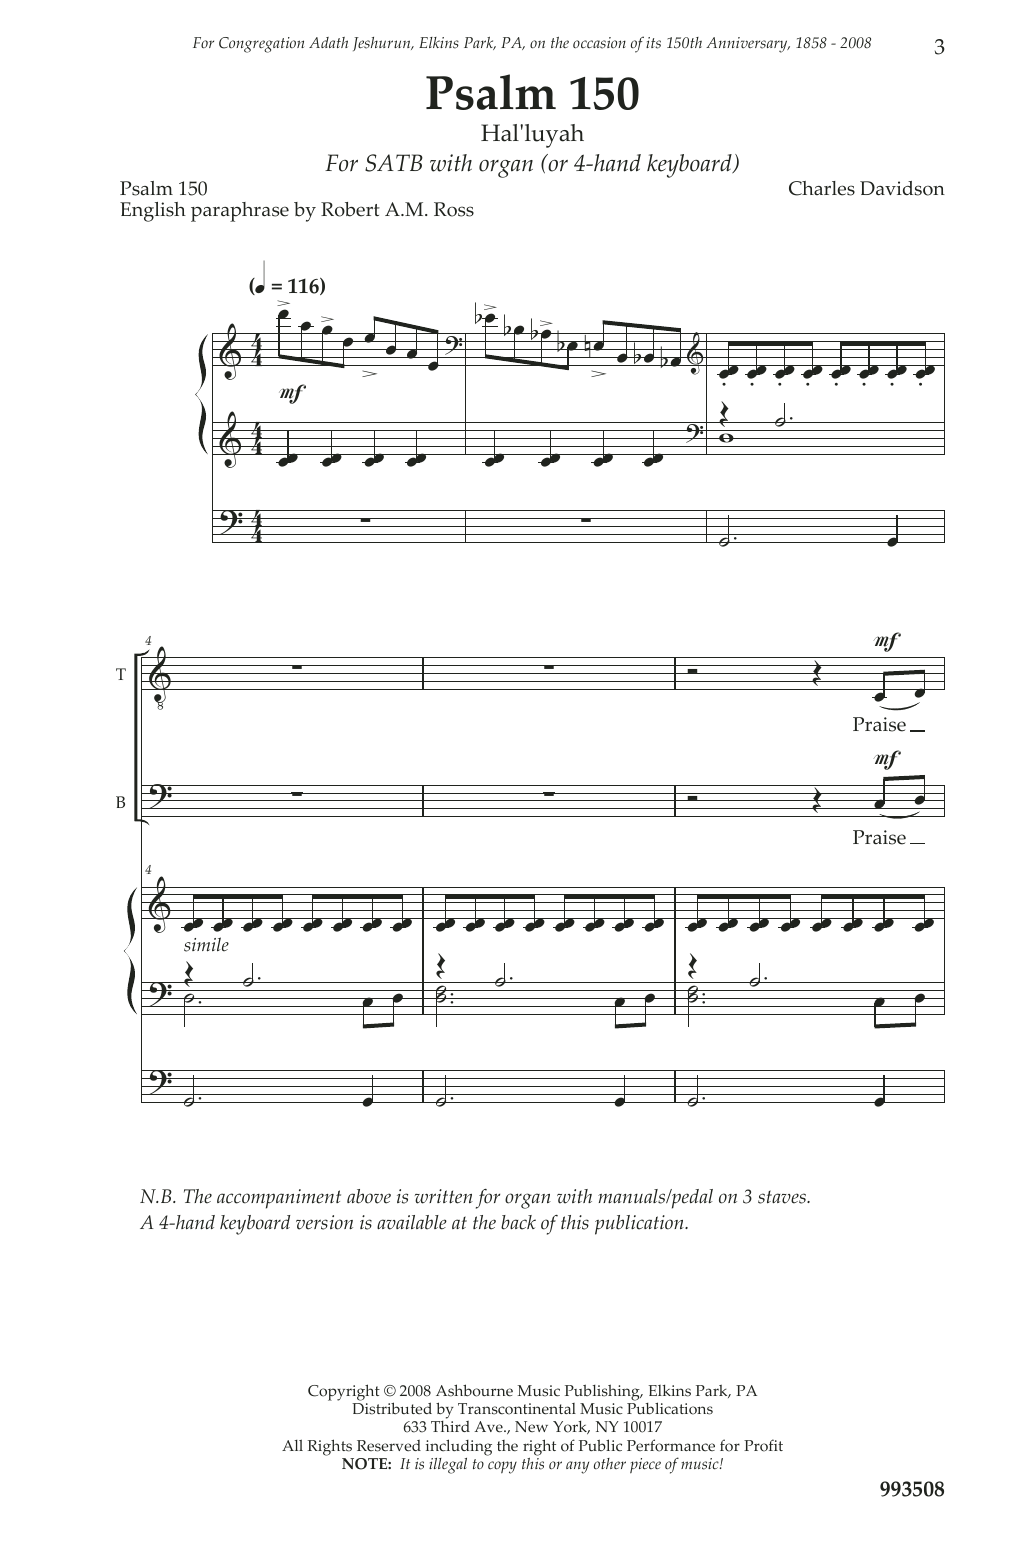 Charles Davidson Psalm 150 Sheet Music Notes & Chords for SATB Choir - Download or Print PDF